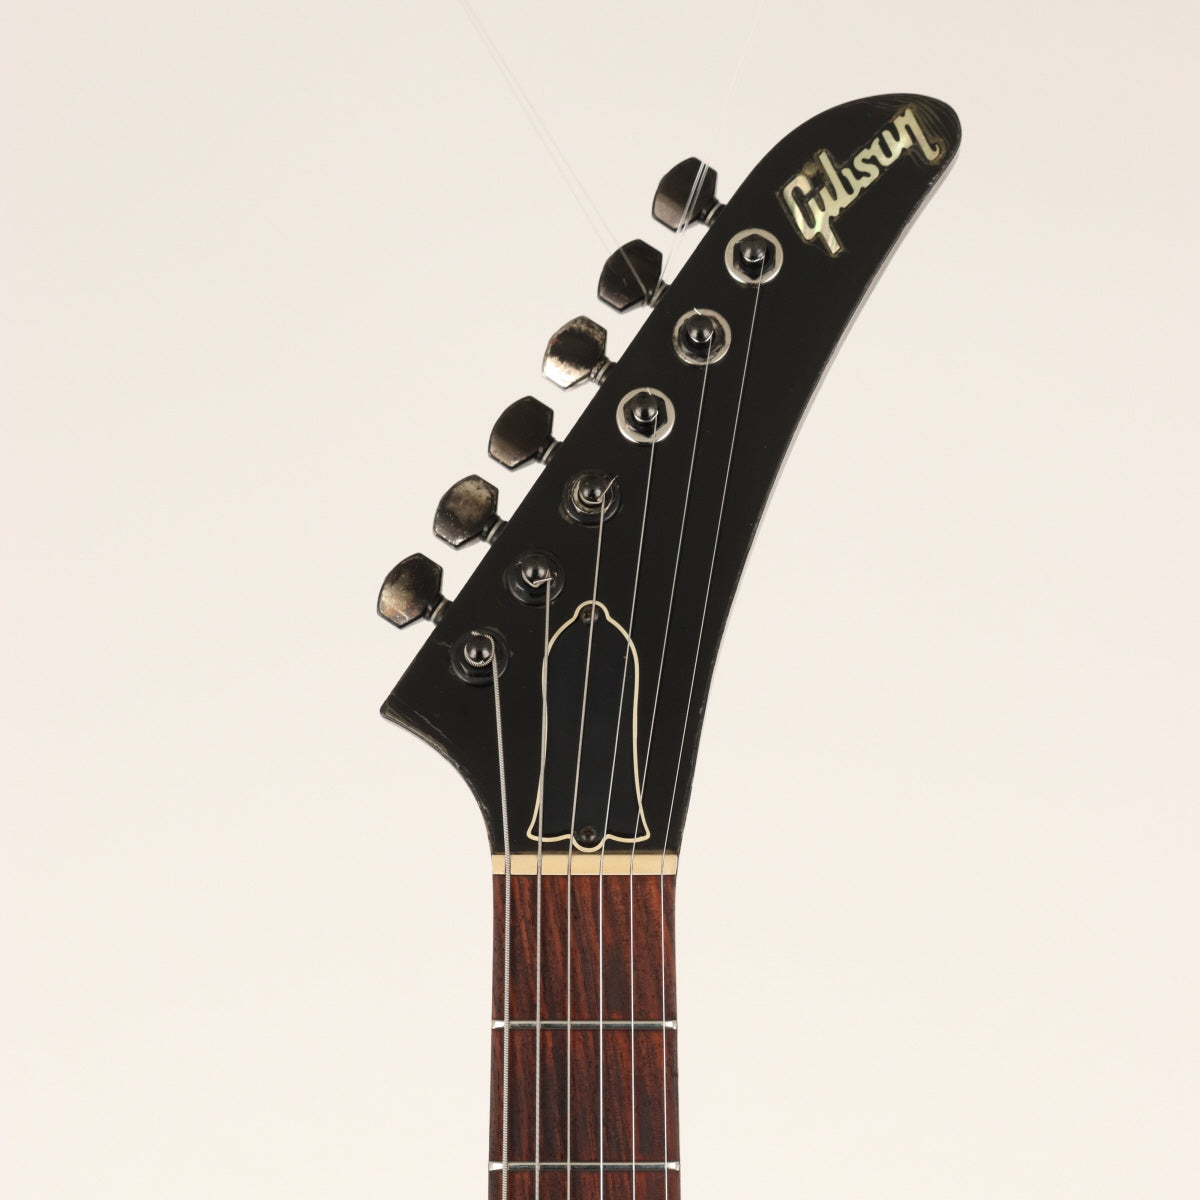 [SN 94007301] USED Gibson / Explorer 76 -Custom Shop Edition- MOD Silver Fox [11]